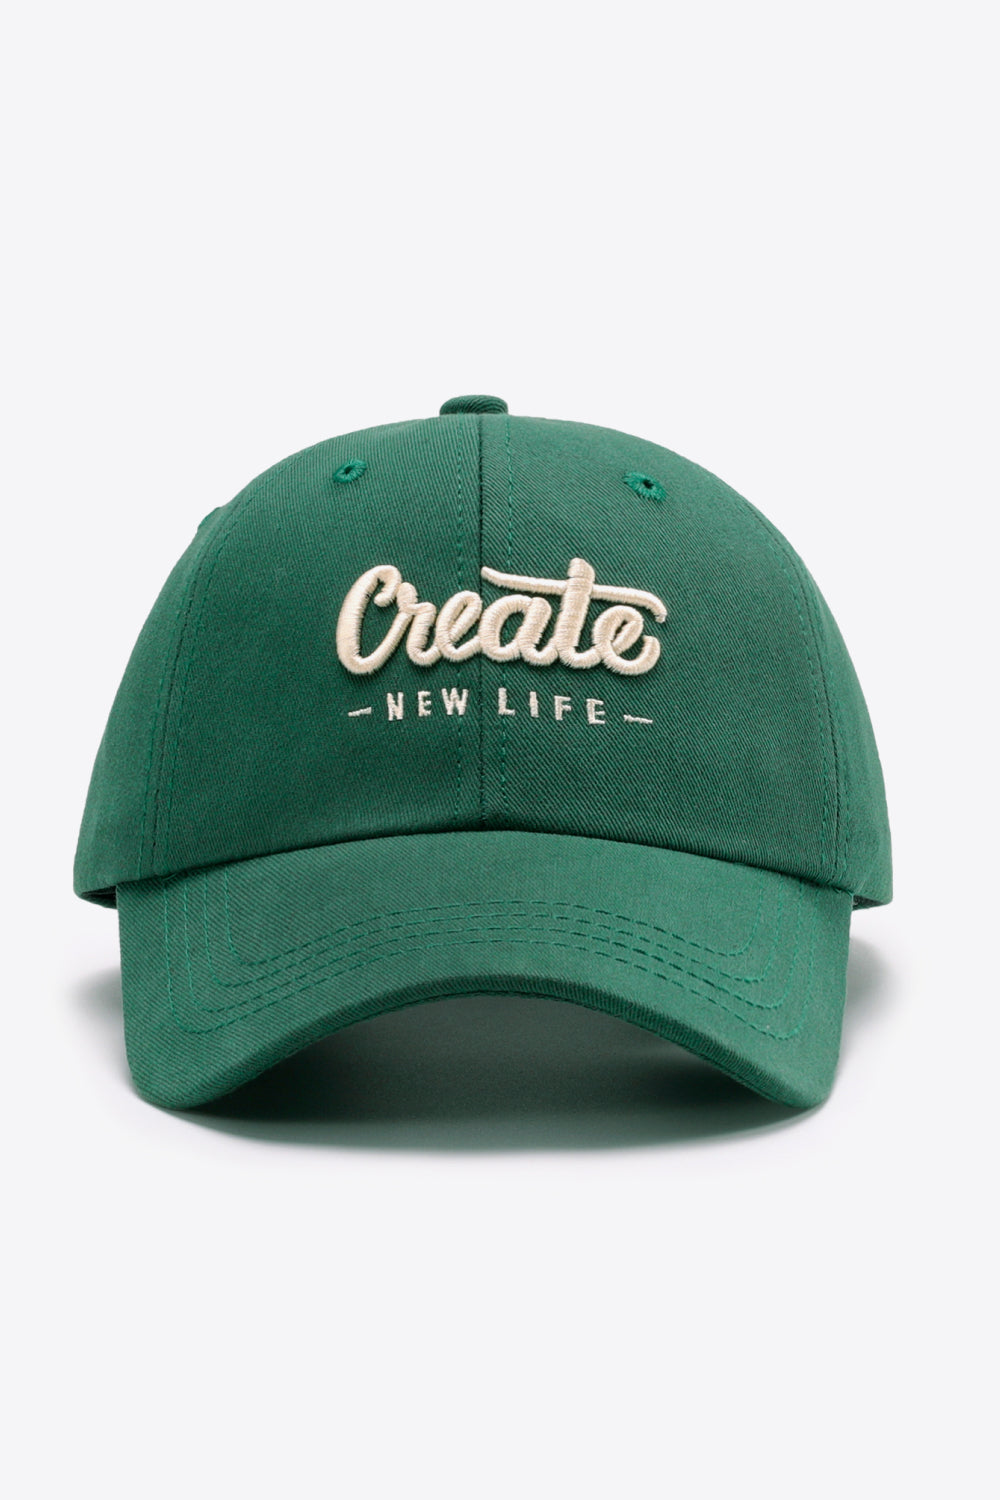 CREATE NEW LIFE Adjustable Cotton Baseball Cap Green One Size